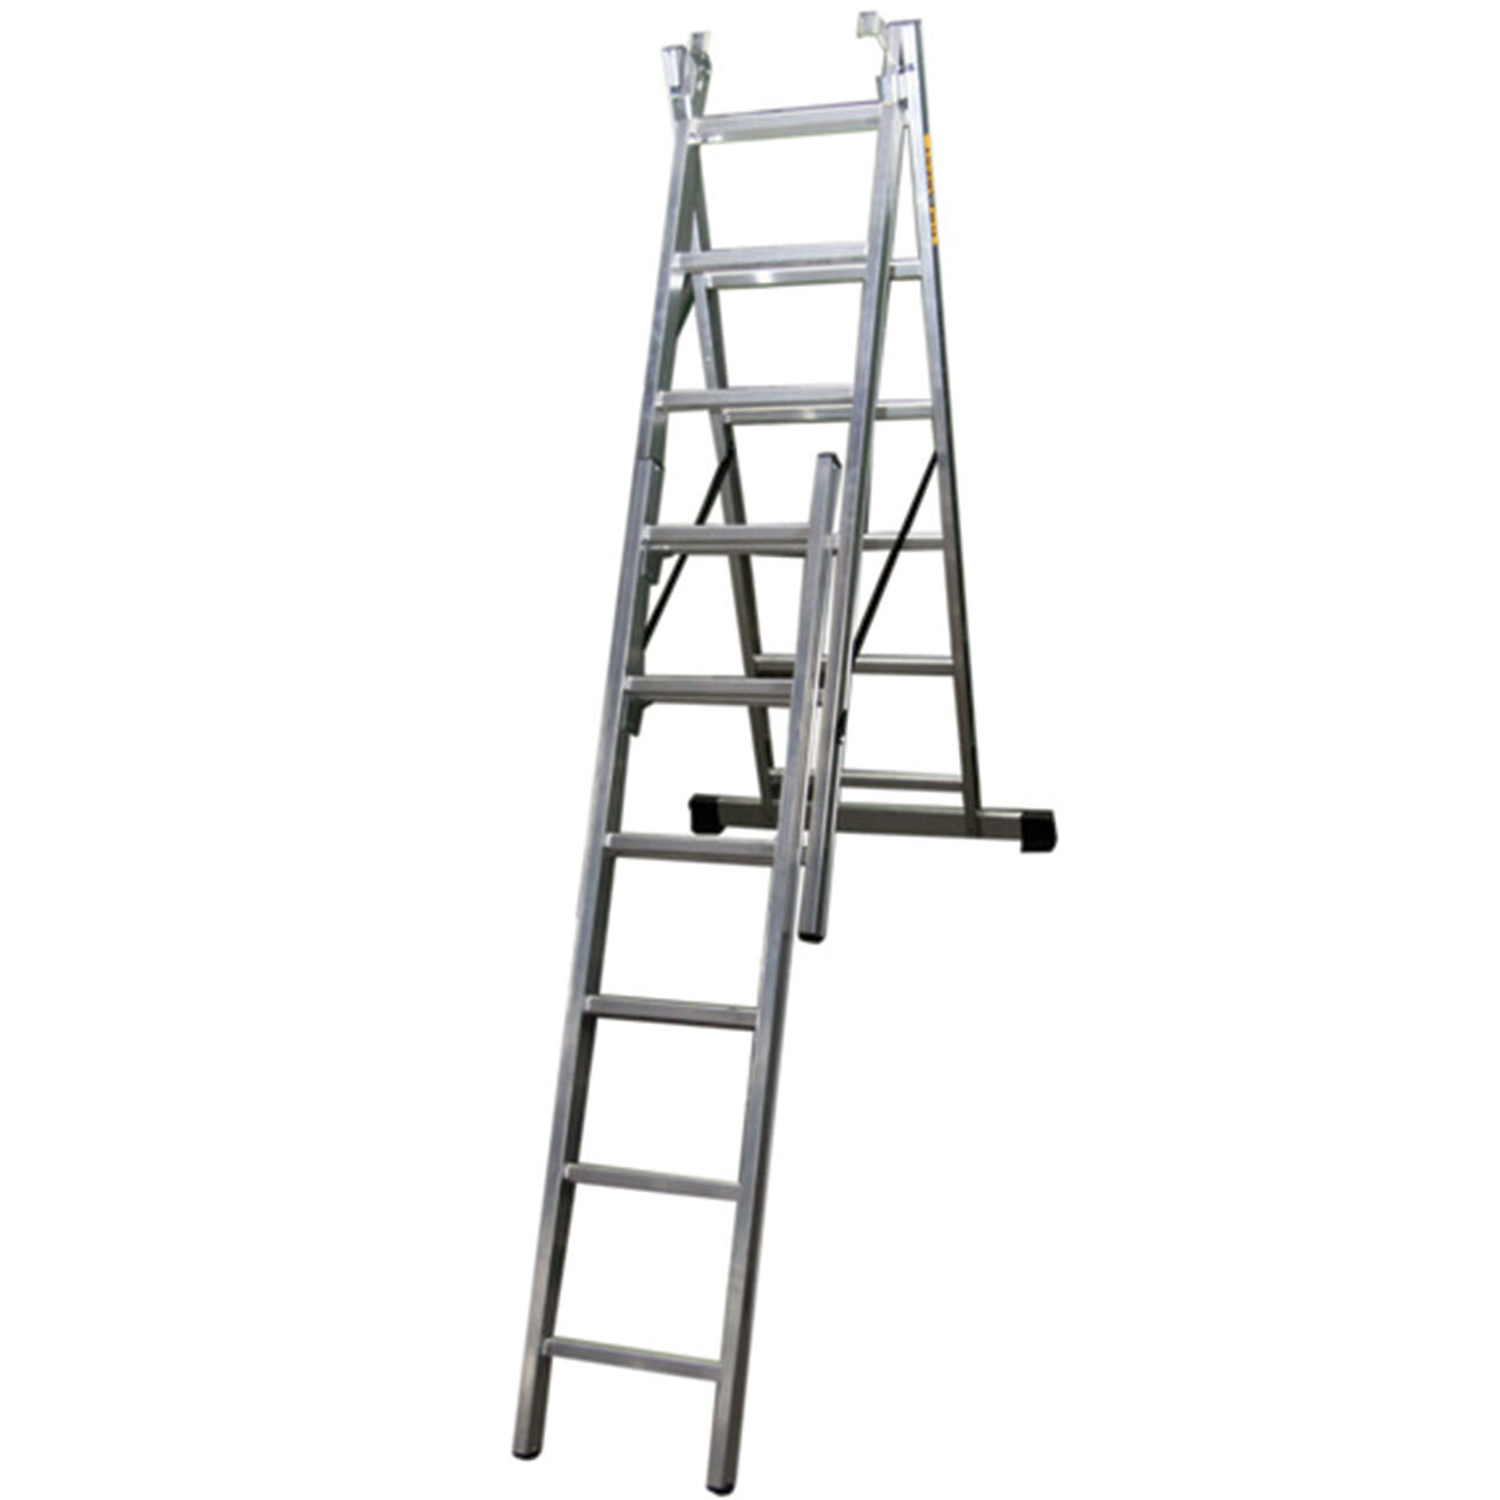 Drabest 3 Section Aluminium Combination Ladder Image 1